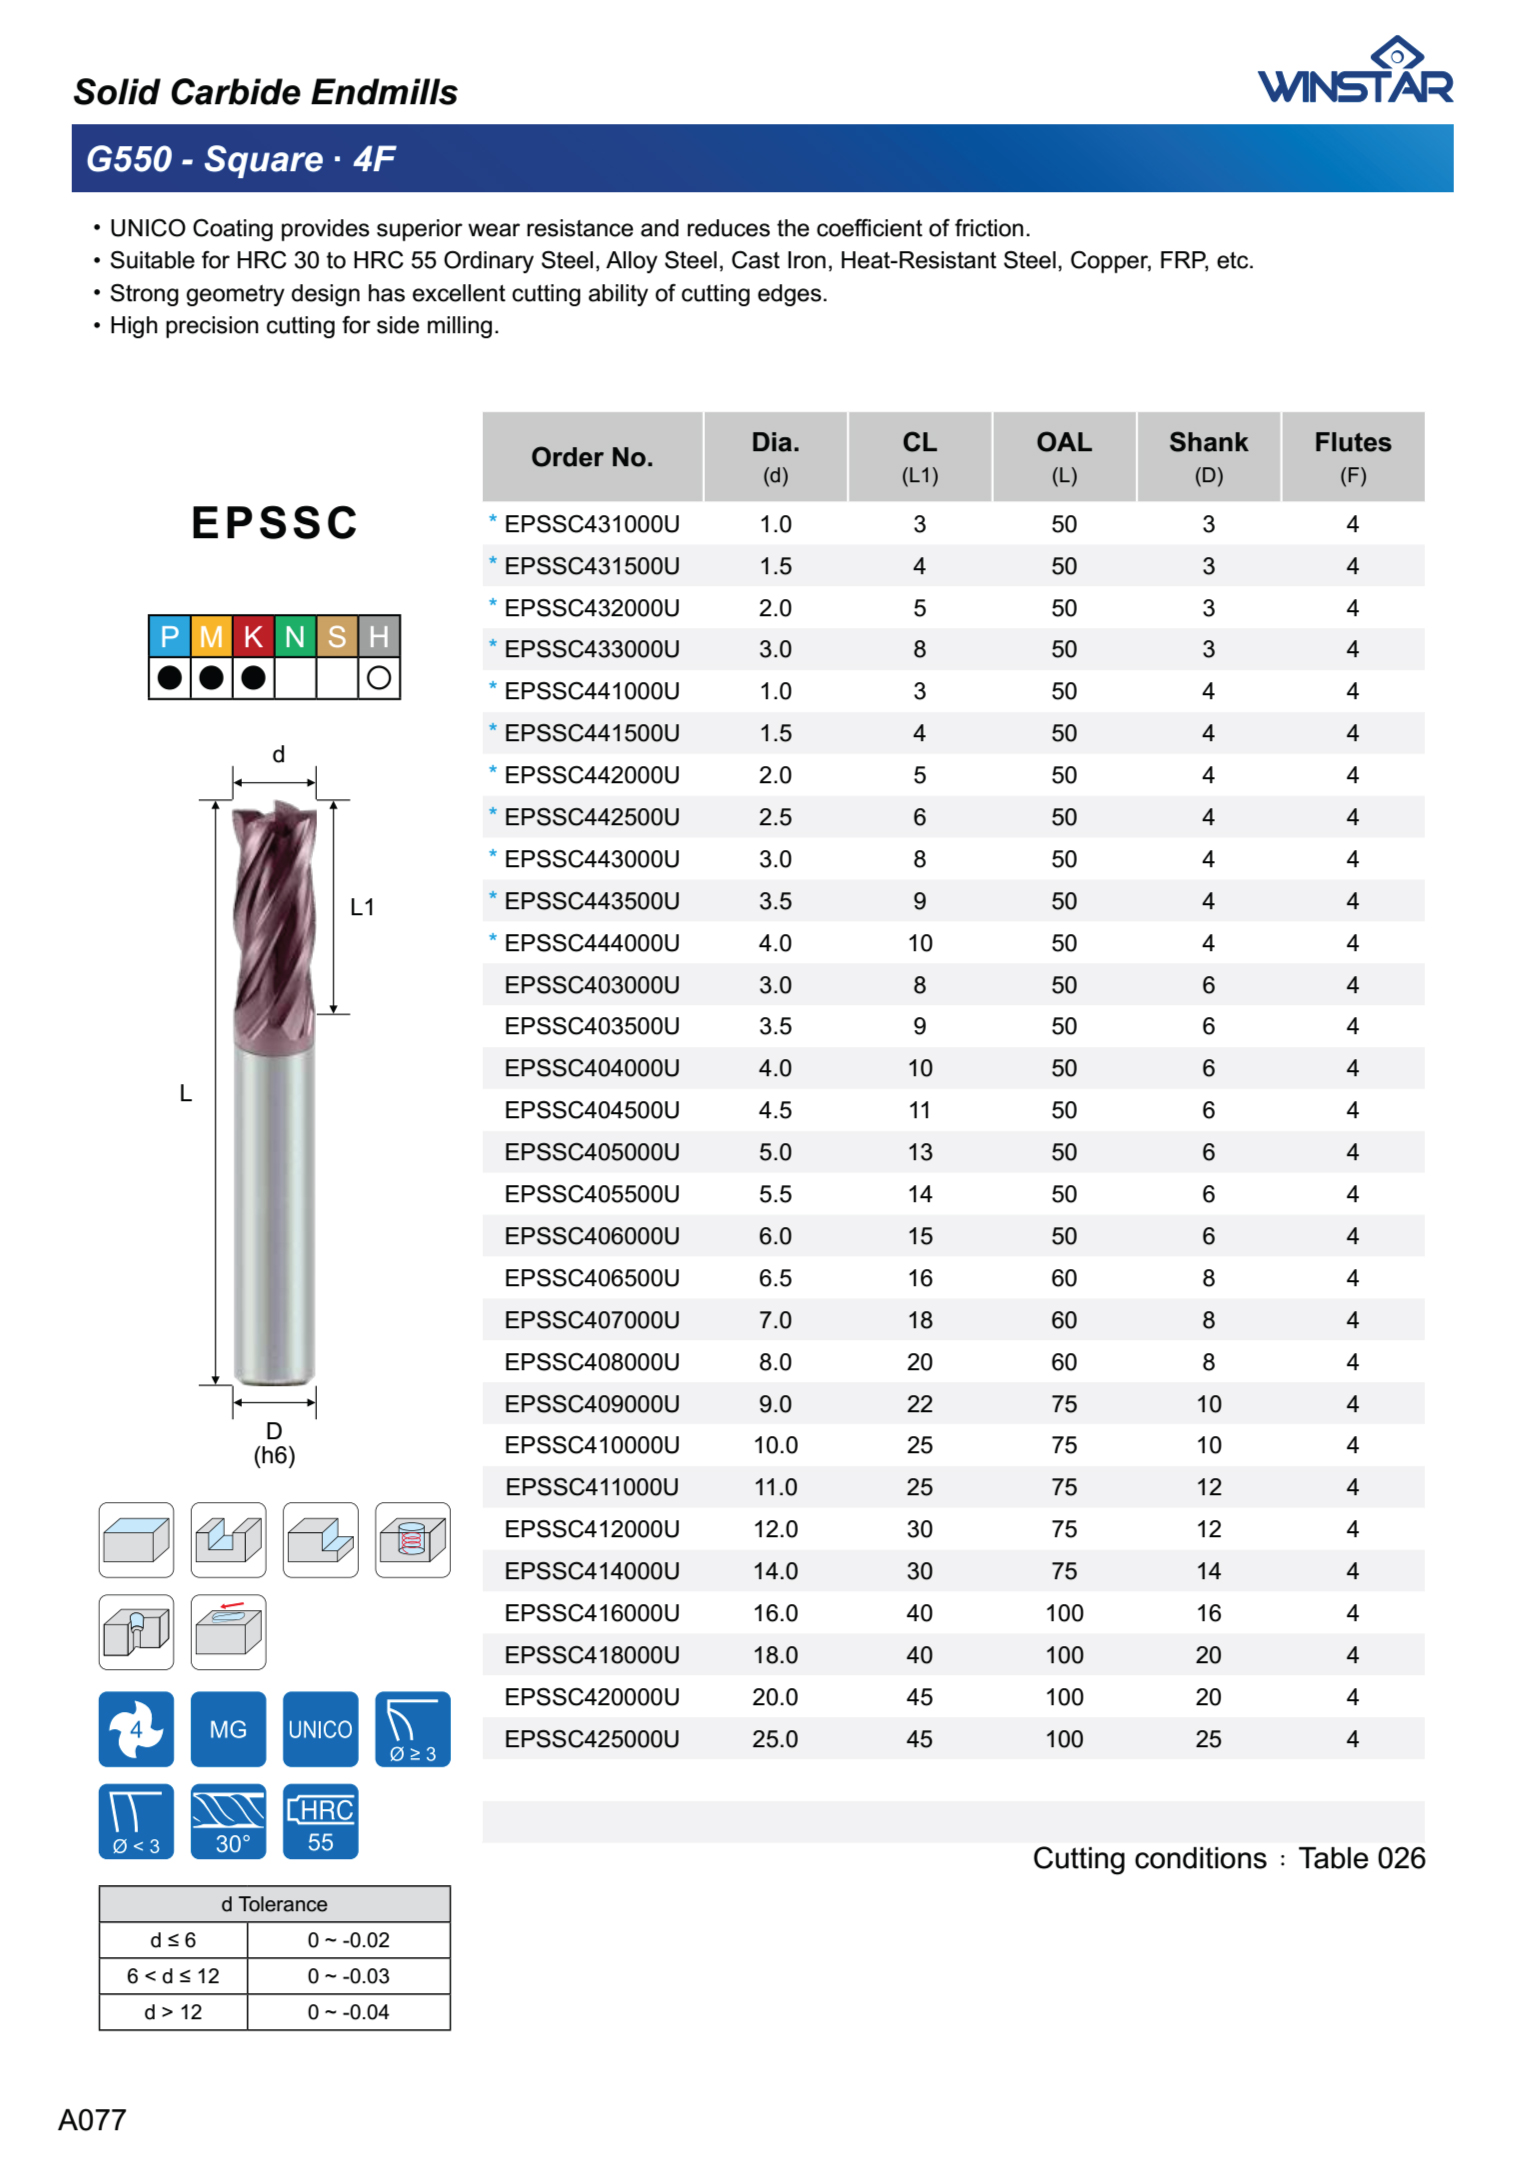 Dao phay ngón solid carbide endmills G550 Series EPSSC Winstar 2